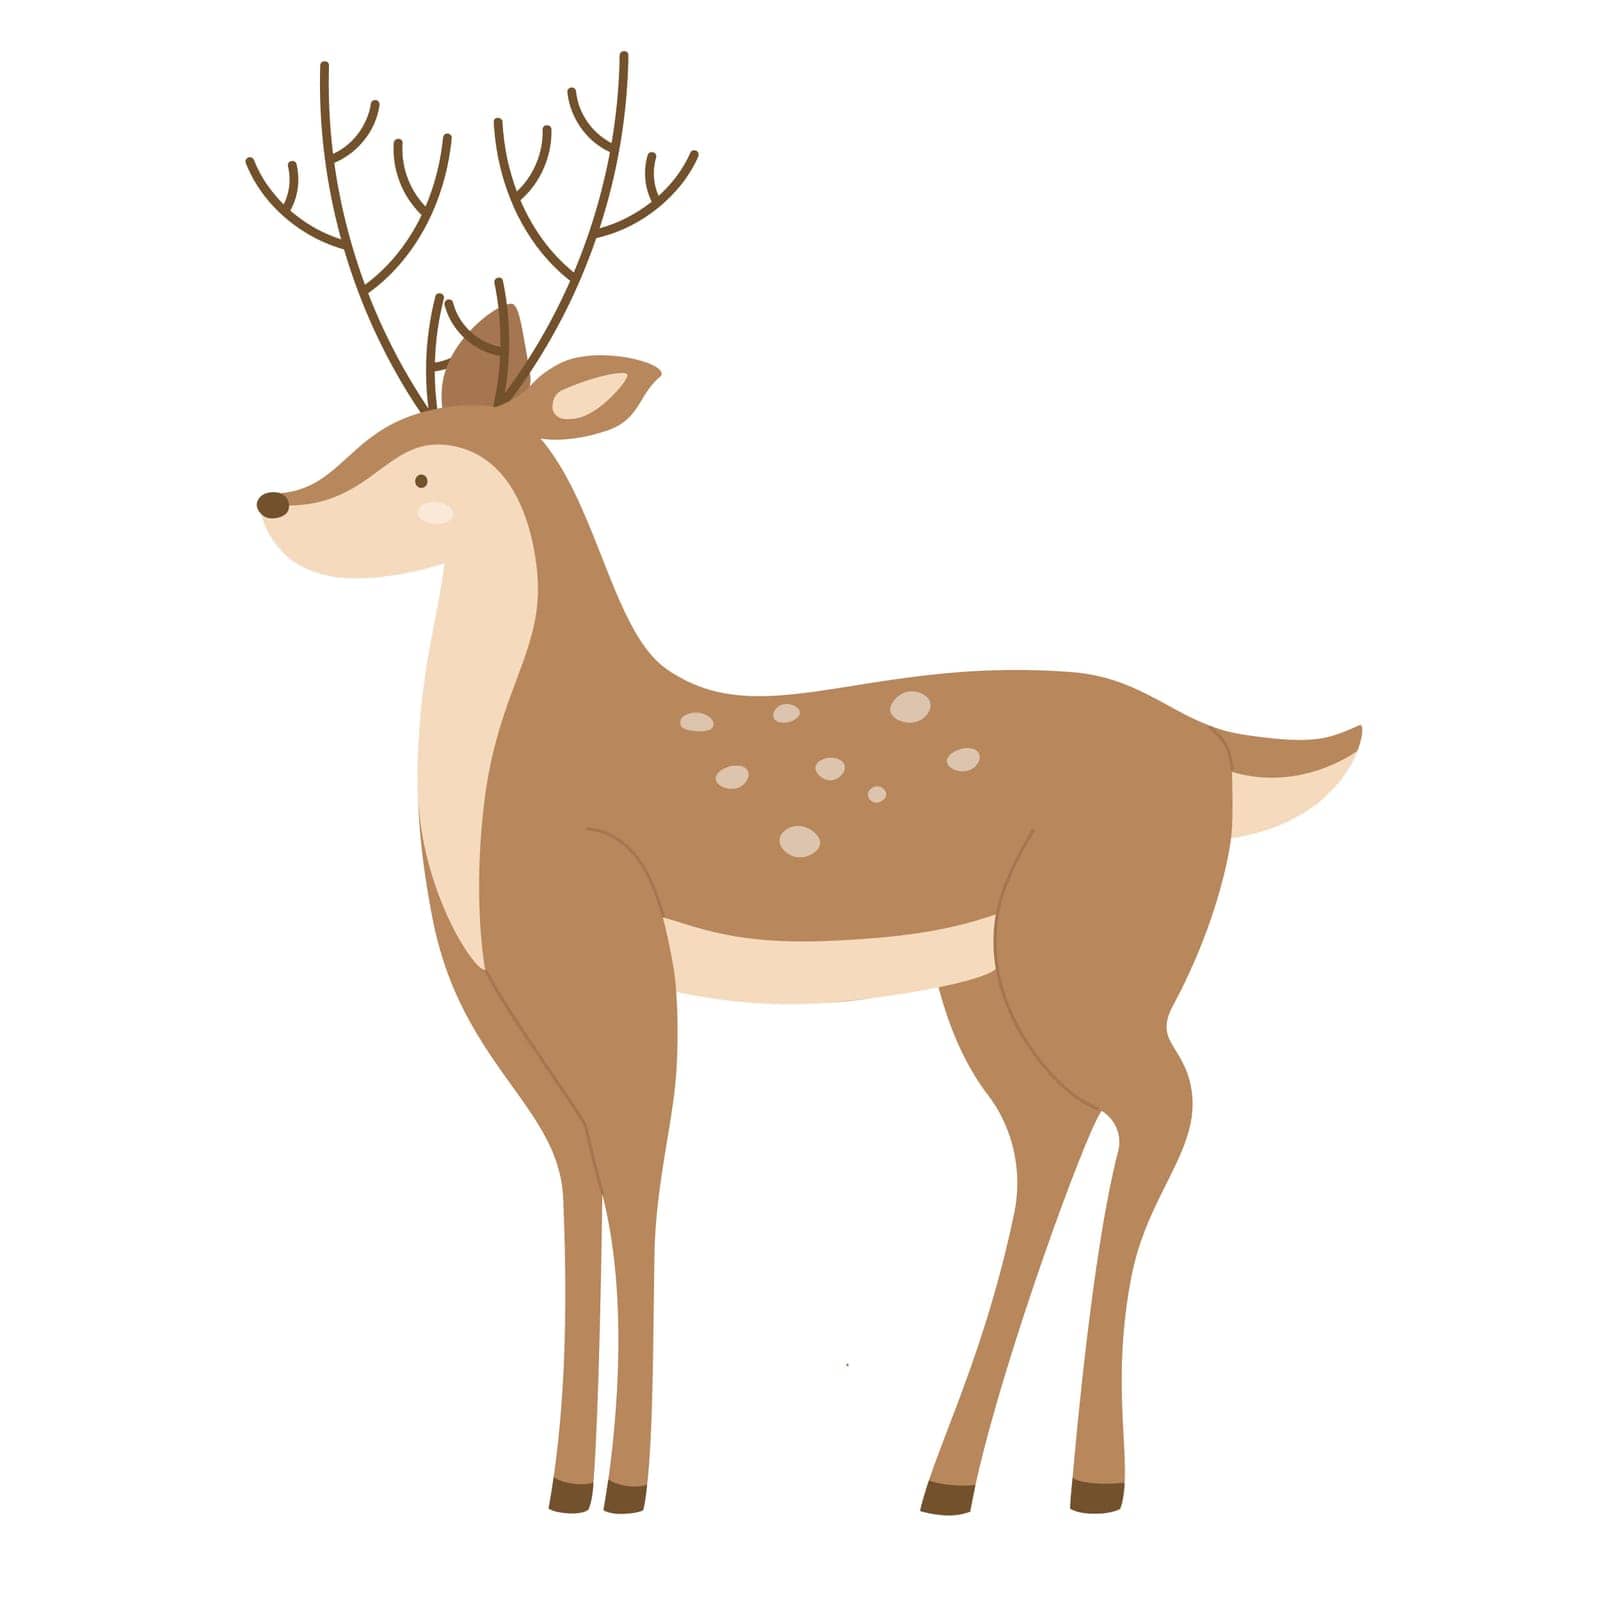 Wildlife deer animal by Popov